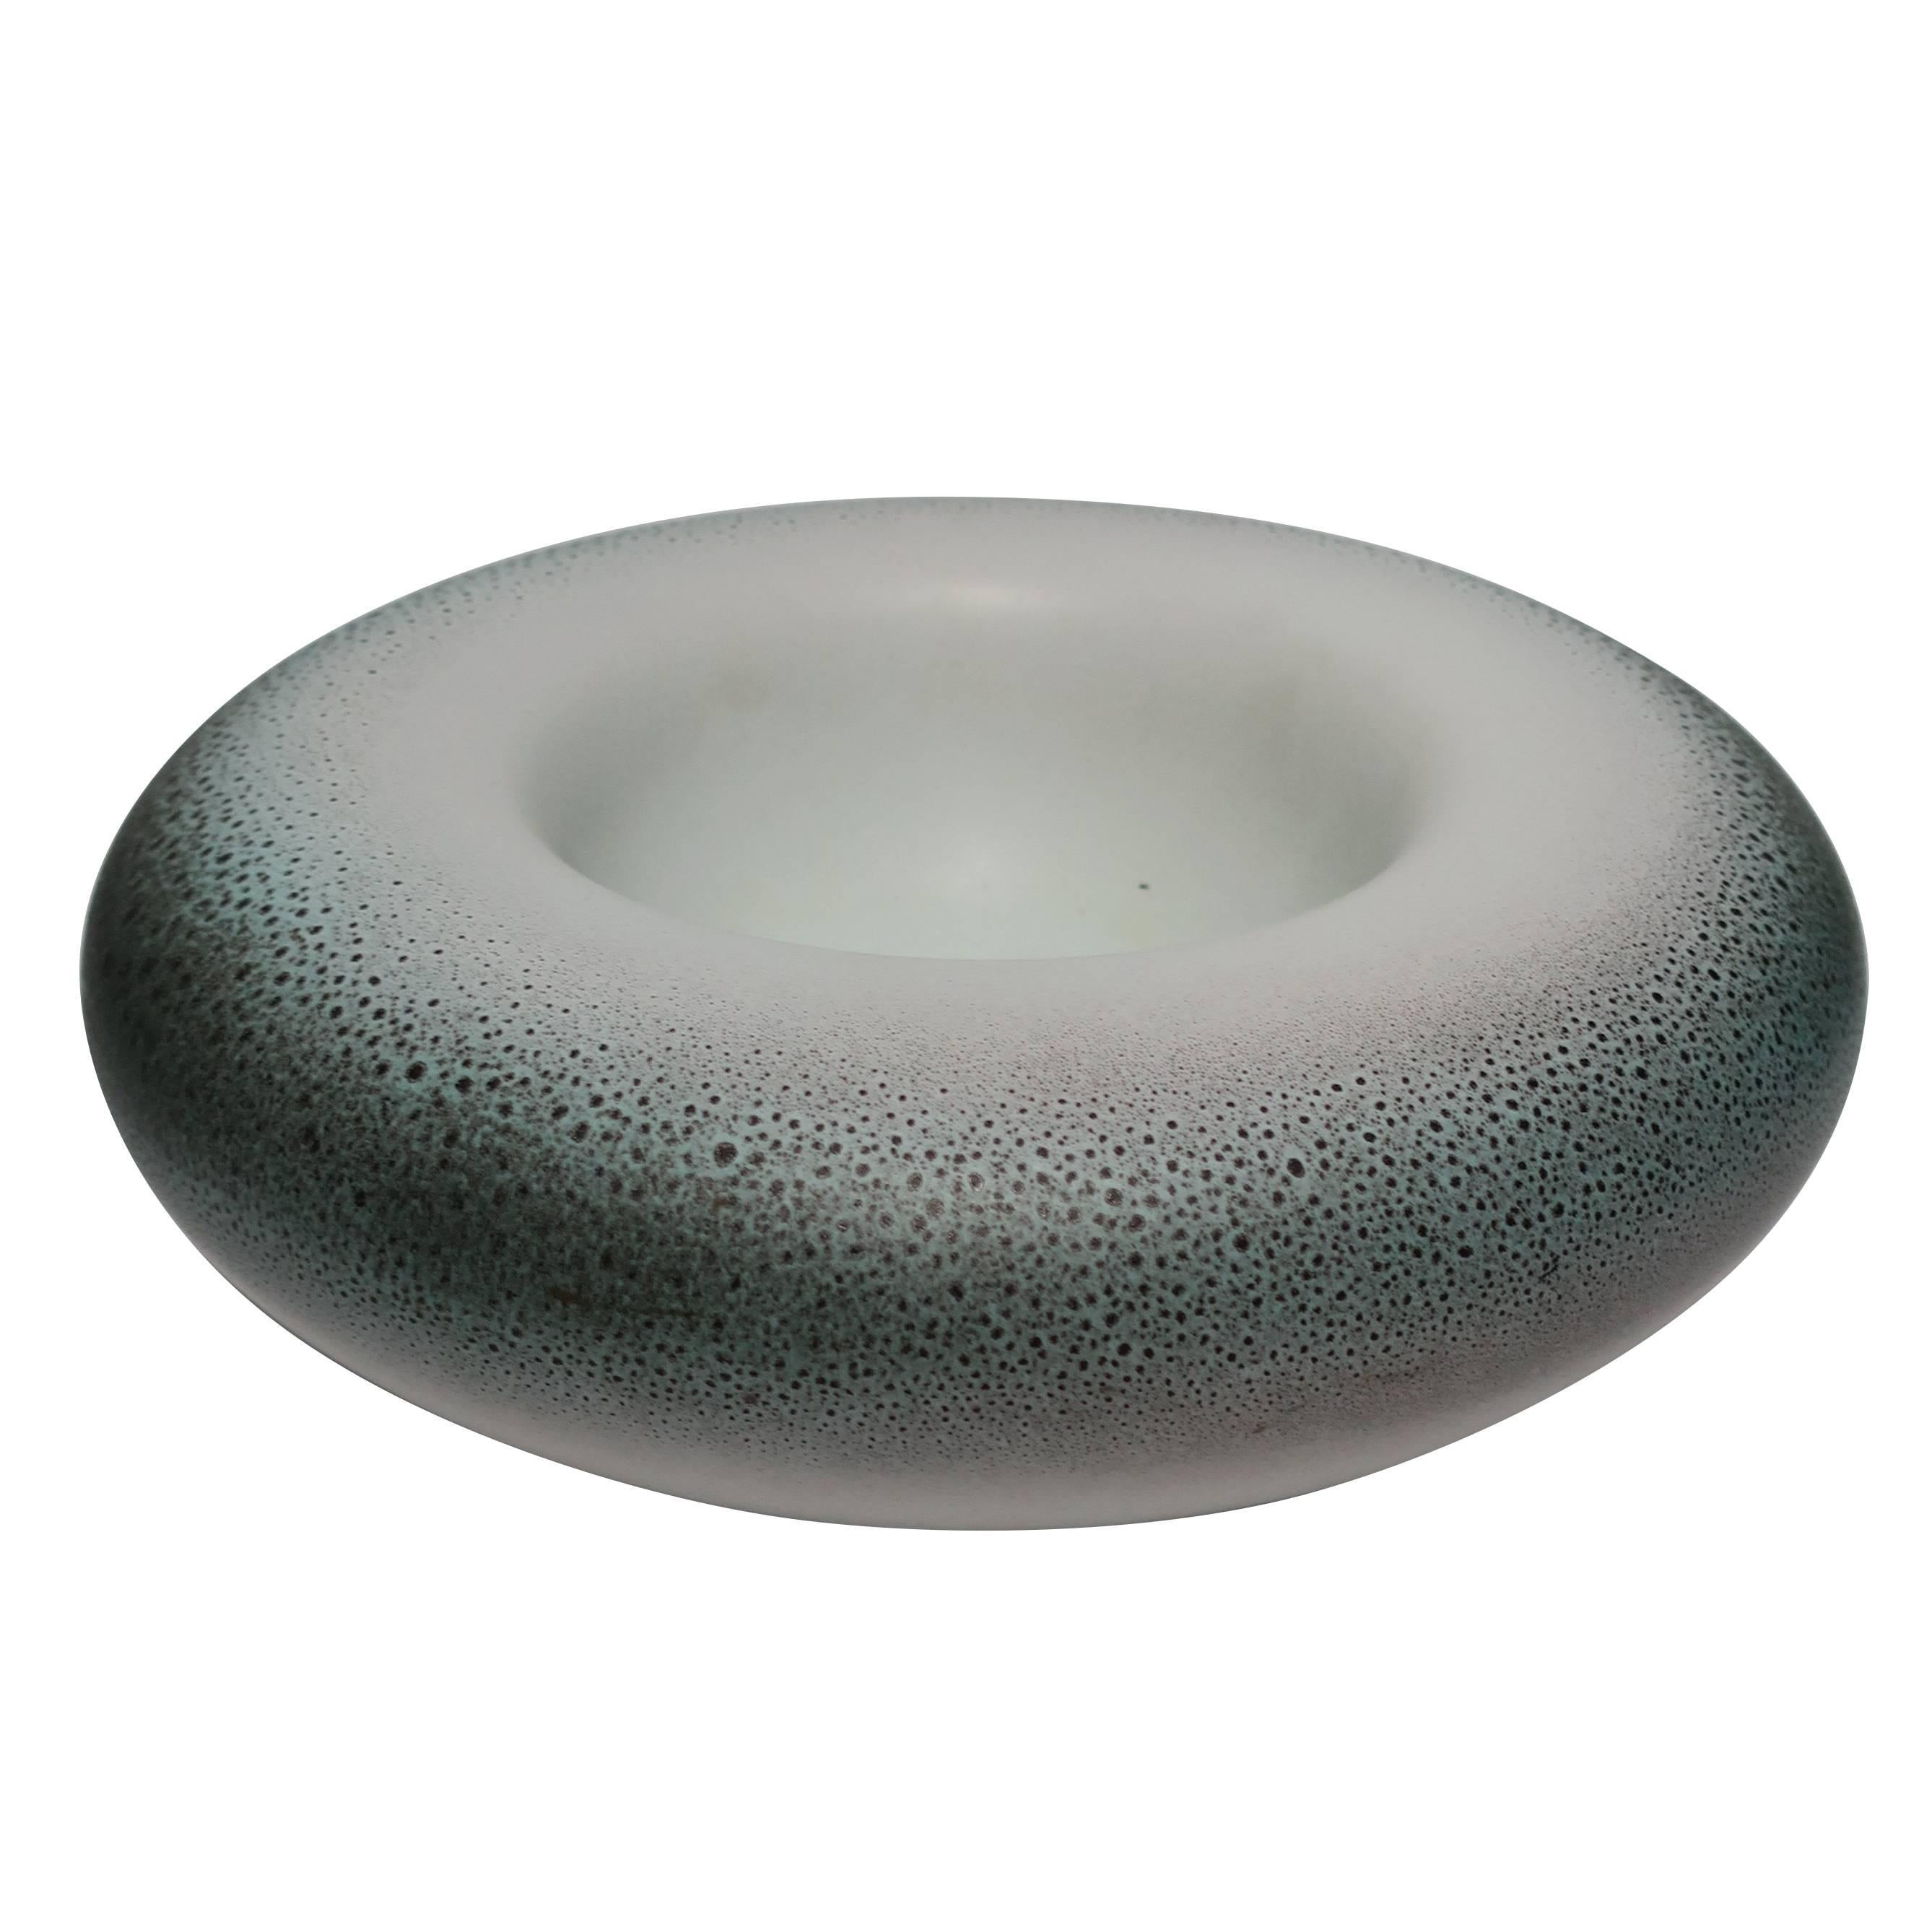 Italian Postmodern Round Ceramic Pottery Bowl